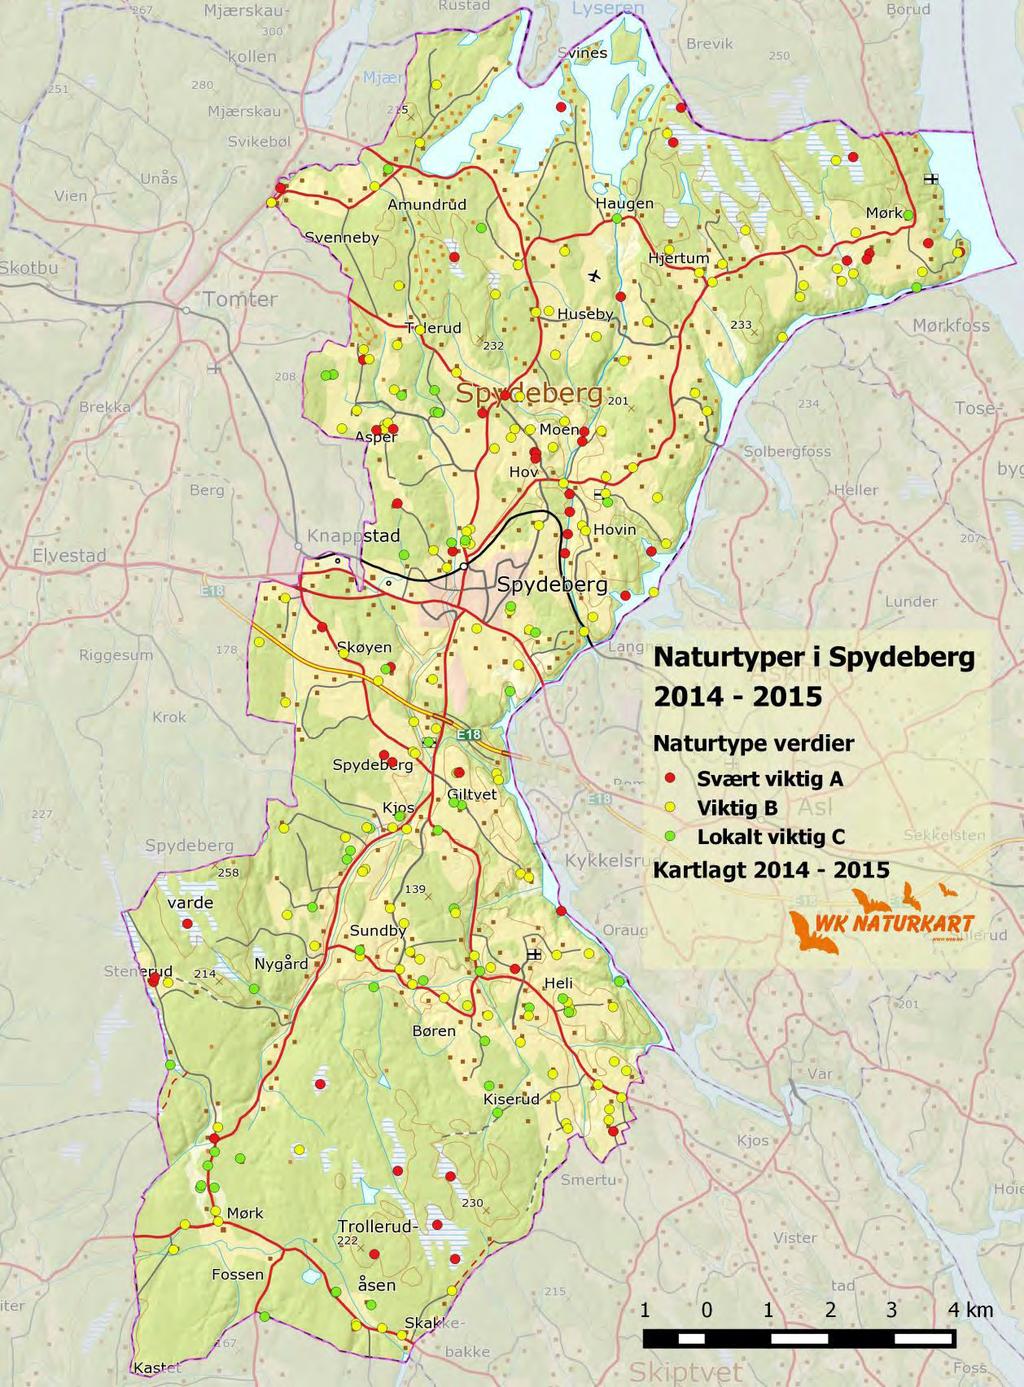 Wergeland Krog Naturkart Naturtypekartlegging i Spydeberg kommune 2014-2015. Fig. 2. Prikkart som viser senterpunktet til de 236 kartfestede naturtypelokaliteter i Spydeberg kommune.